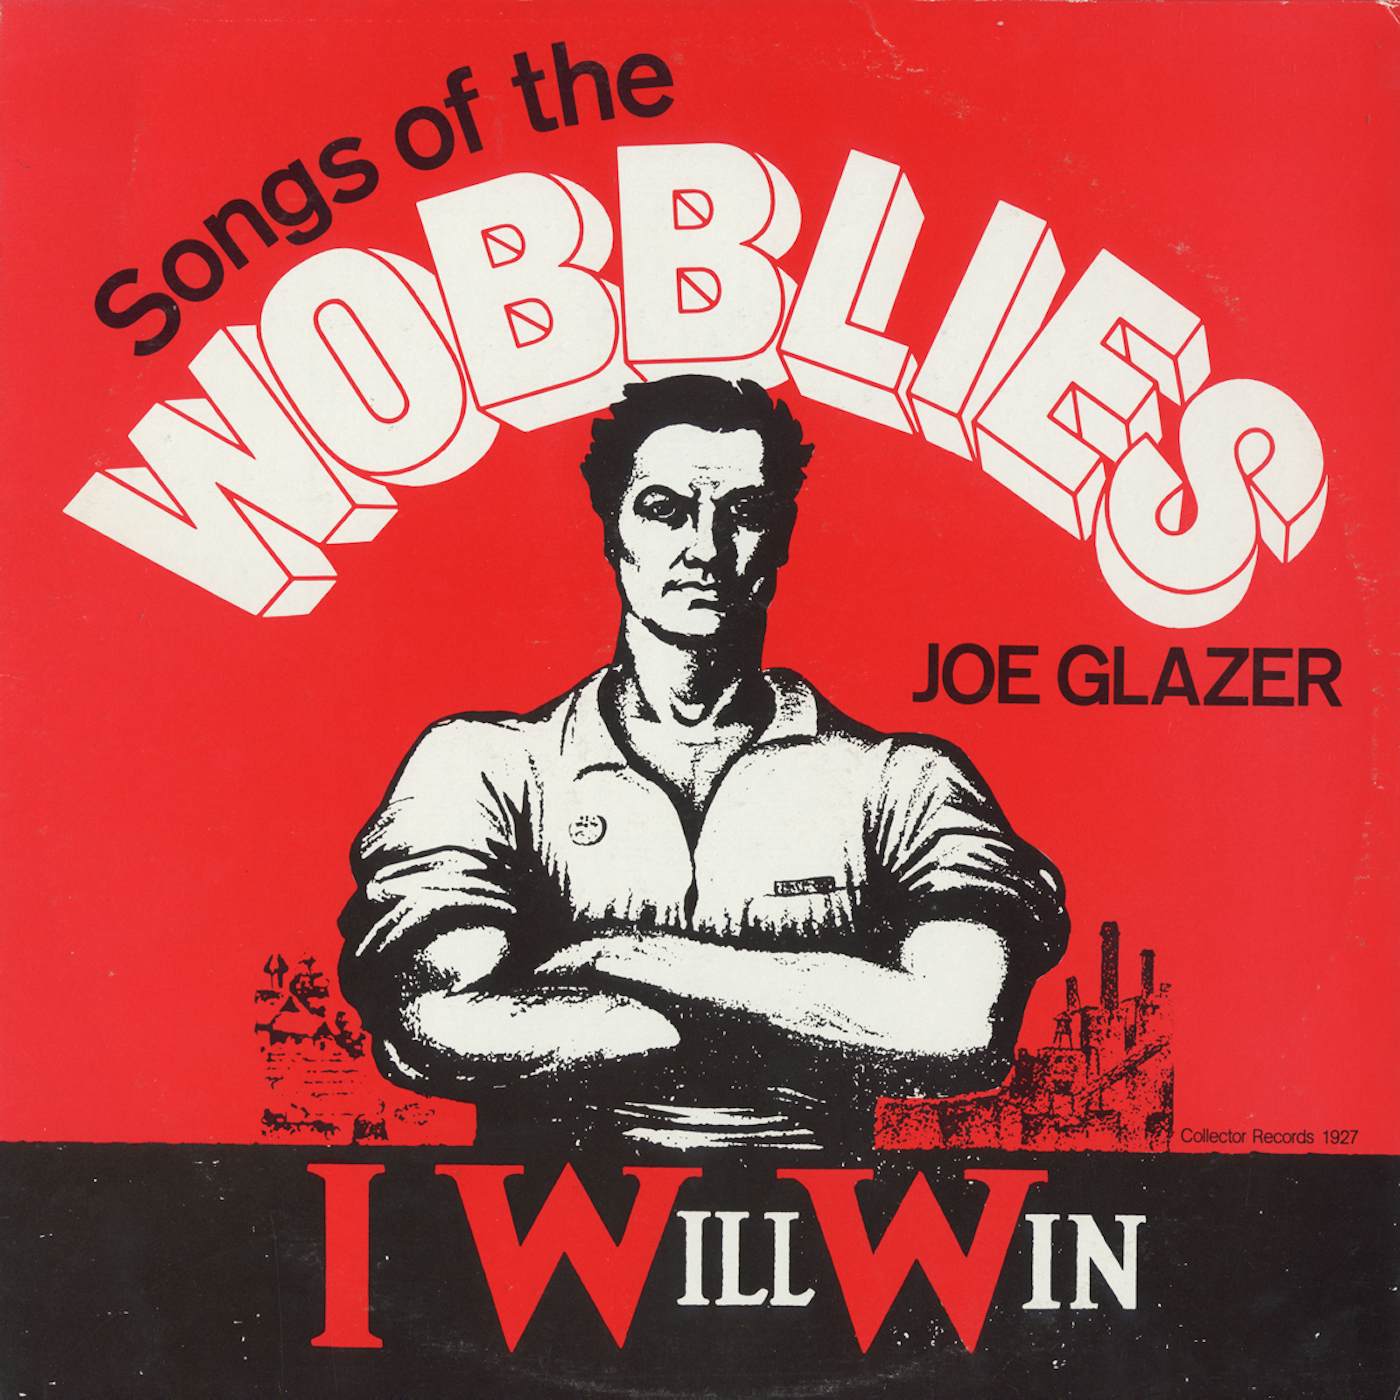 Joe Glazer I WILL WIN: SONGS OF THE WOBBLIES CD